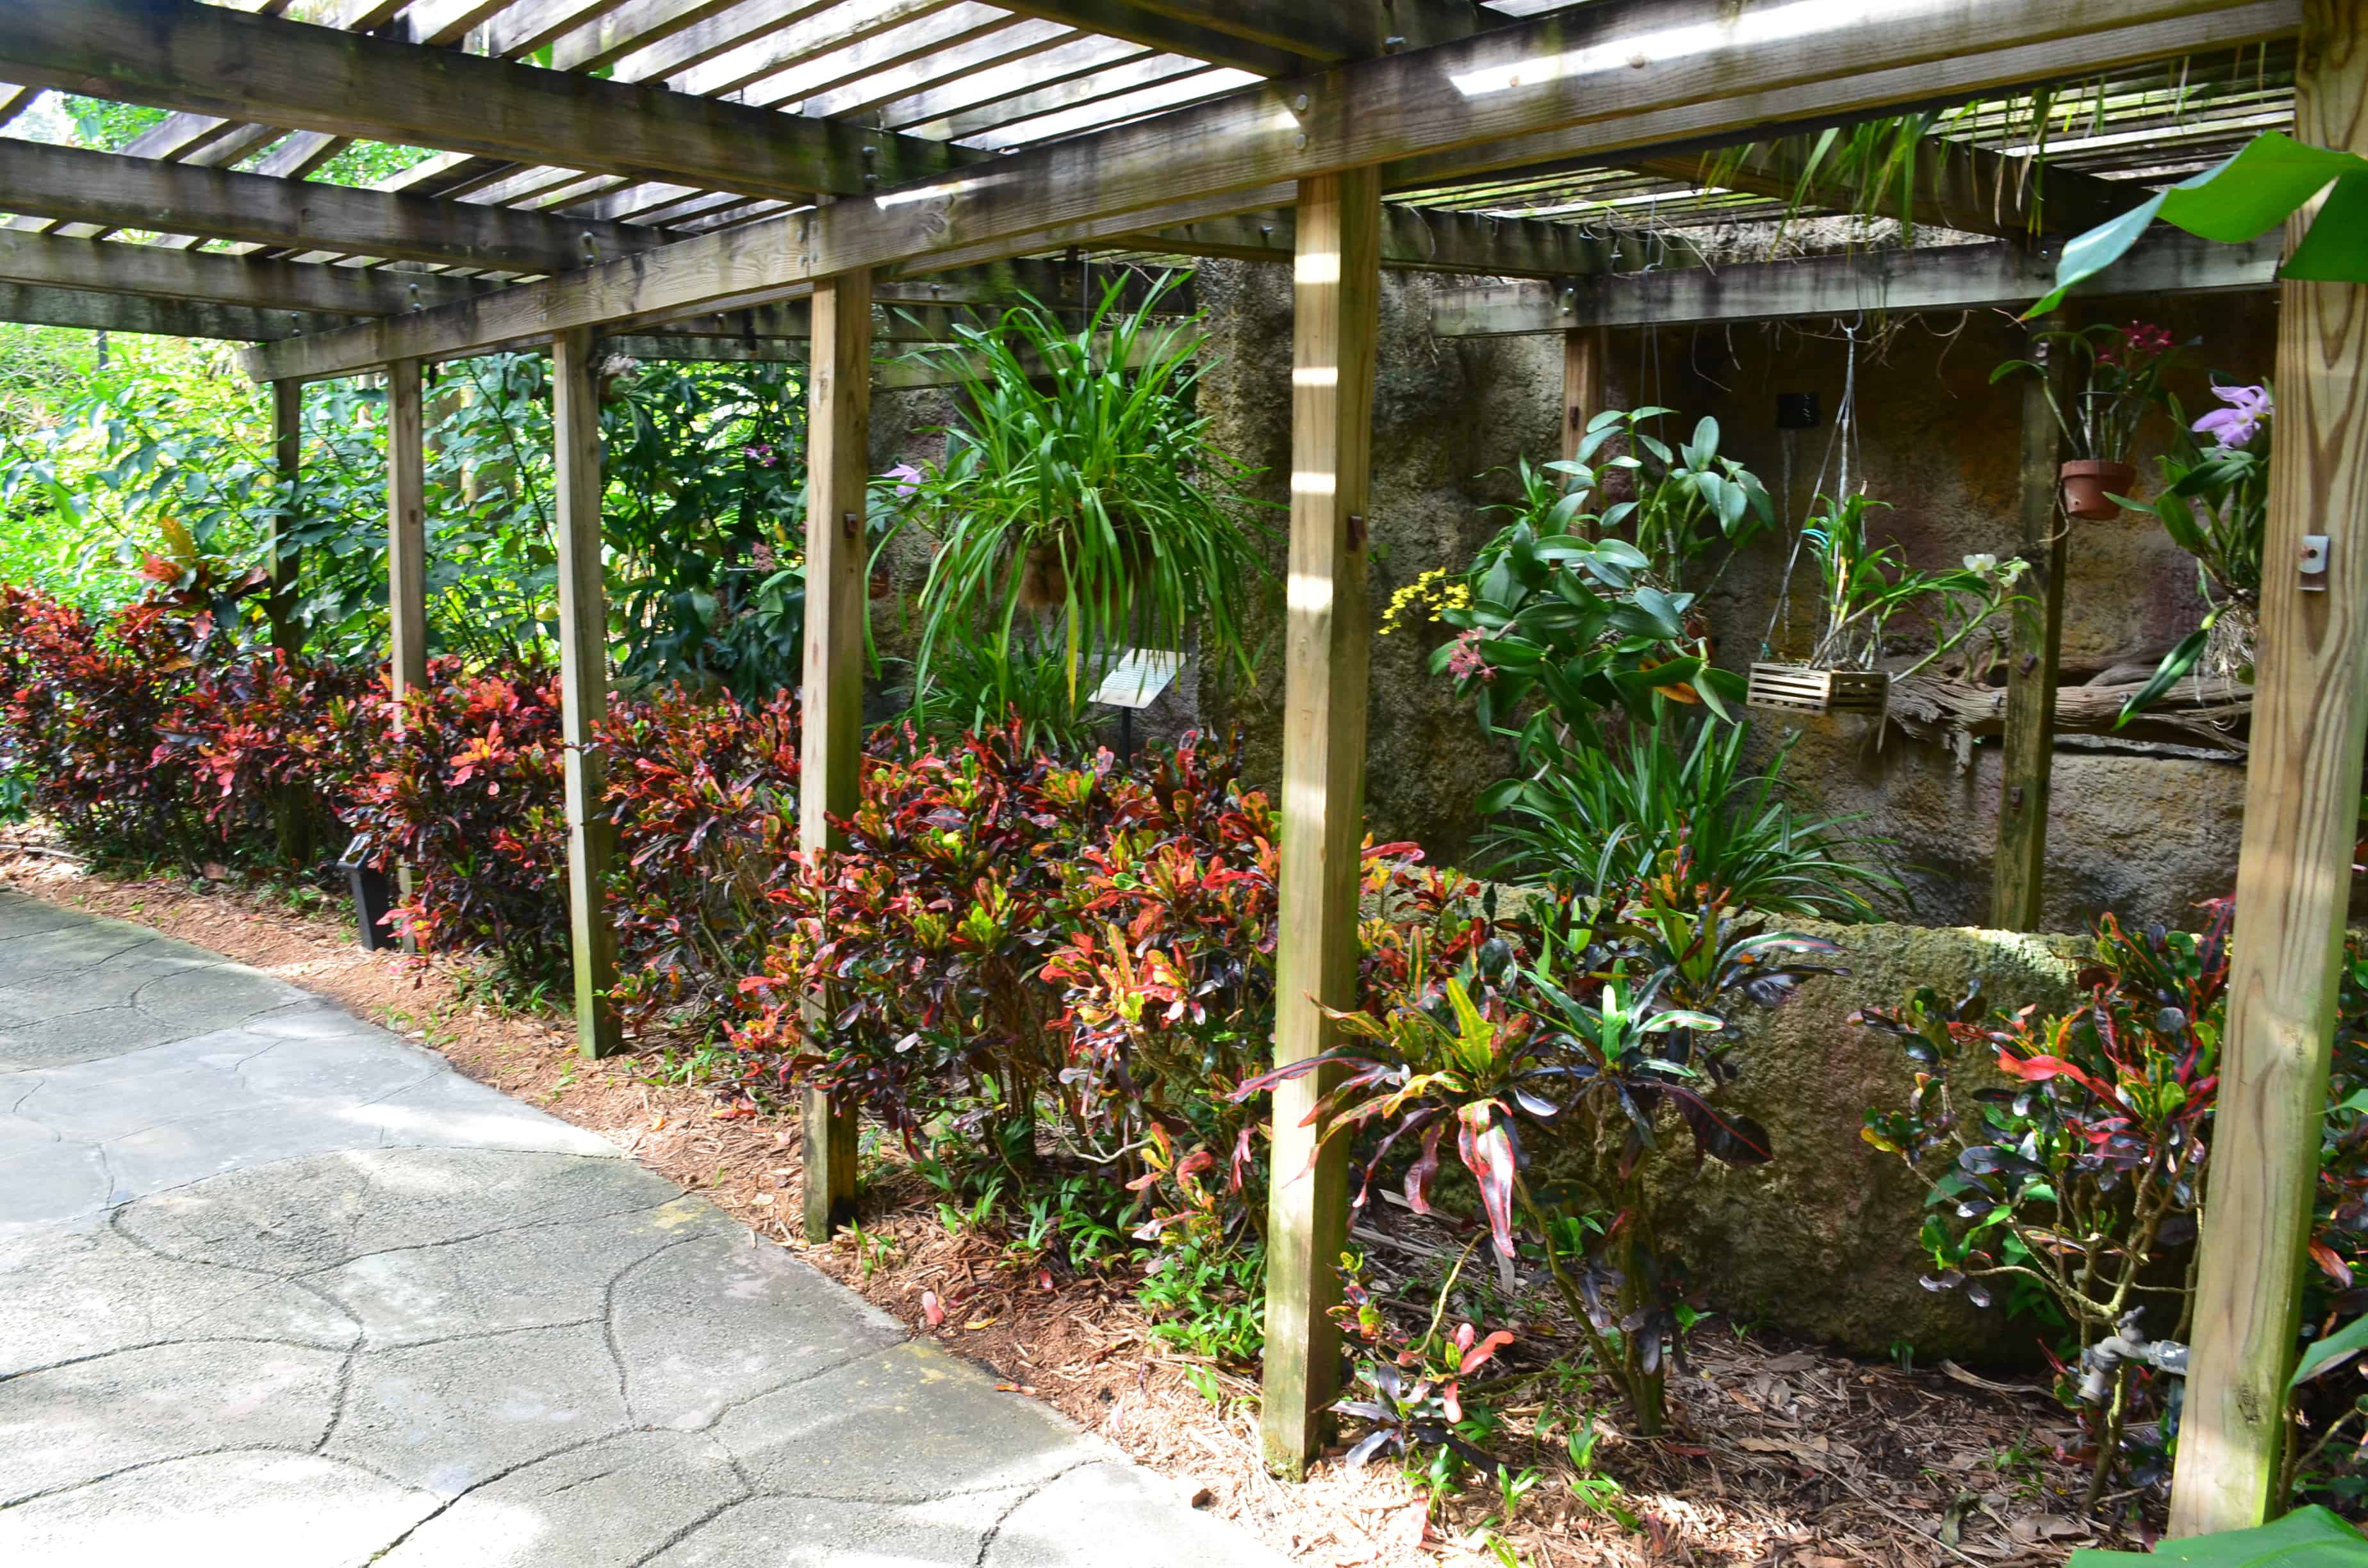 Hanging plants at the Sunken Gardens in St. Petersburg, Florida